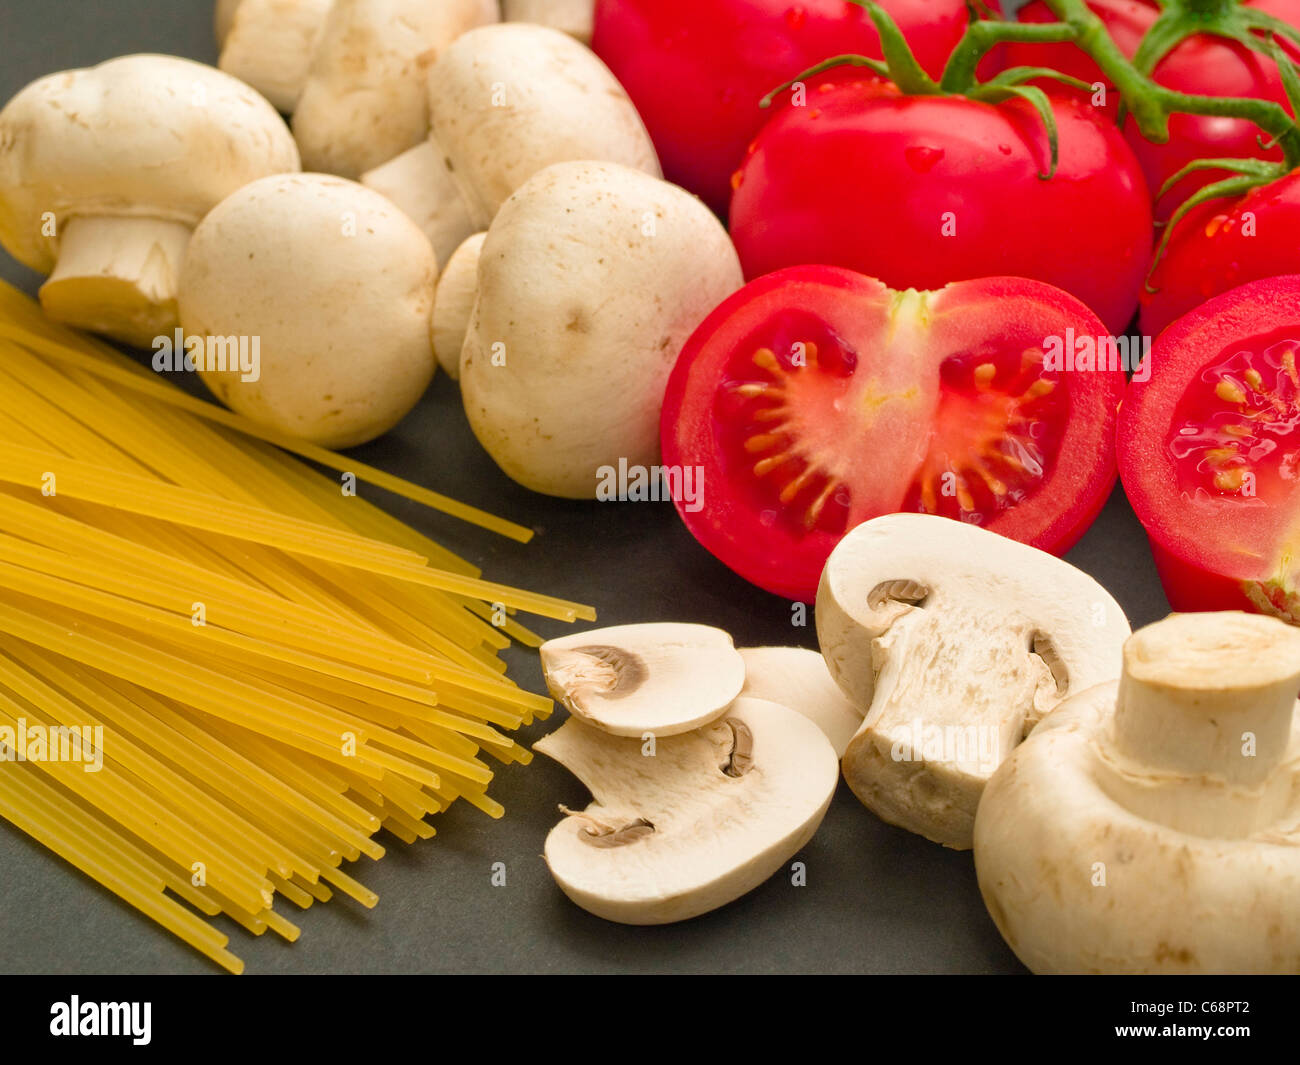 Tomaten, Campignons und Spaghetti | tomatoes, mushrooms and spaghetti Stock Photo